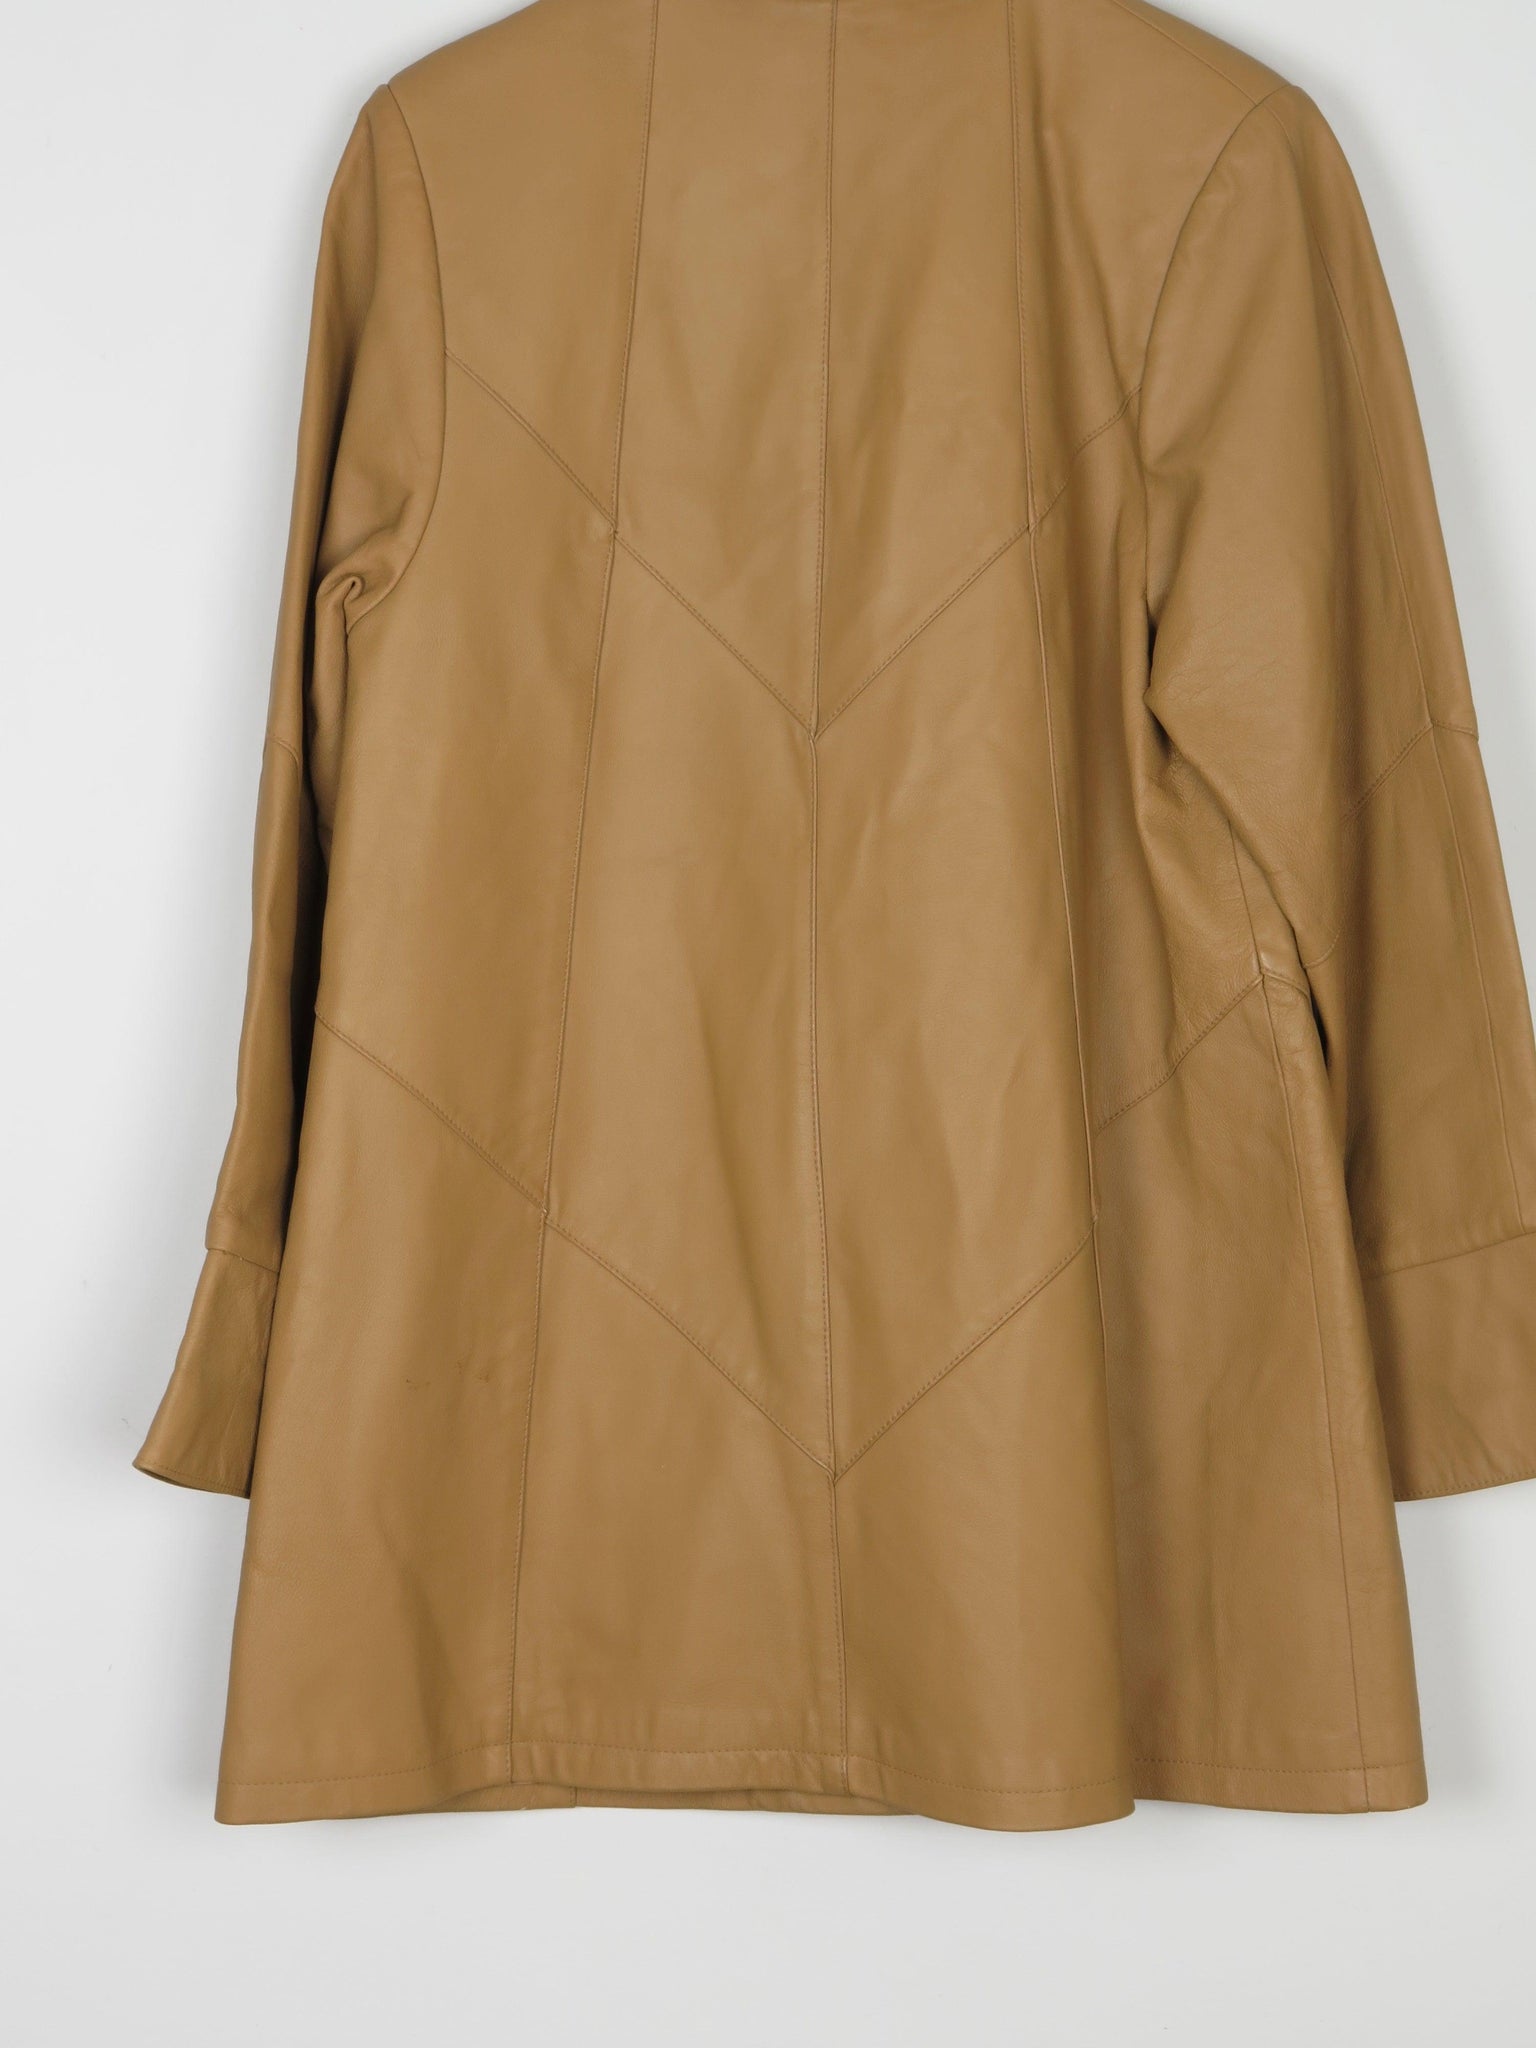 Women’s Vintage Tan Leather 3/4 Coat M - The Harlequin